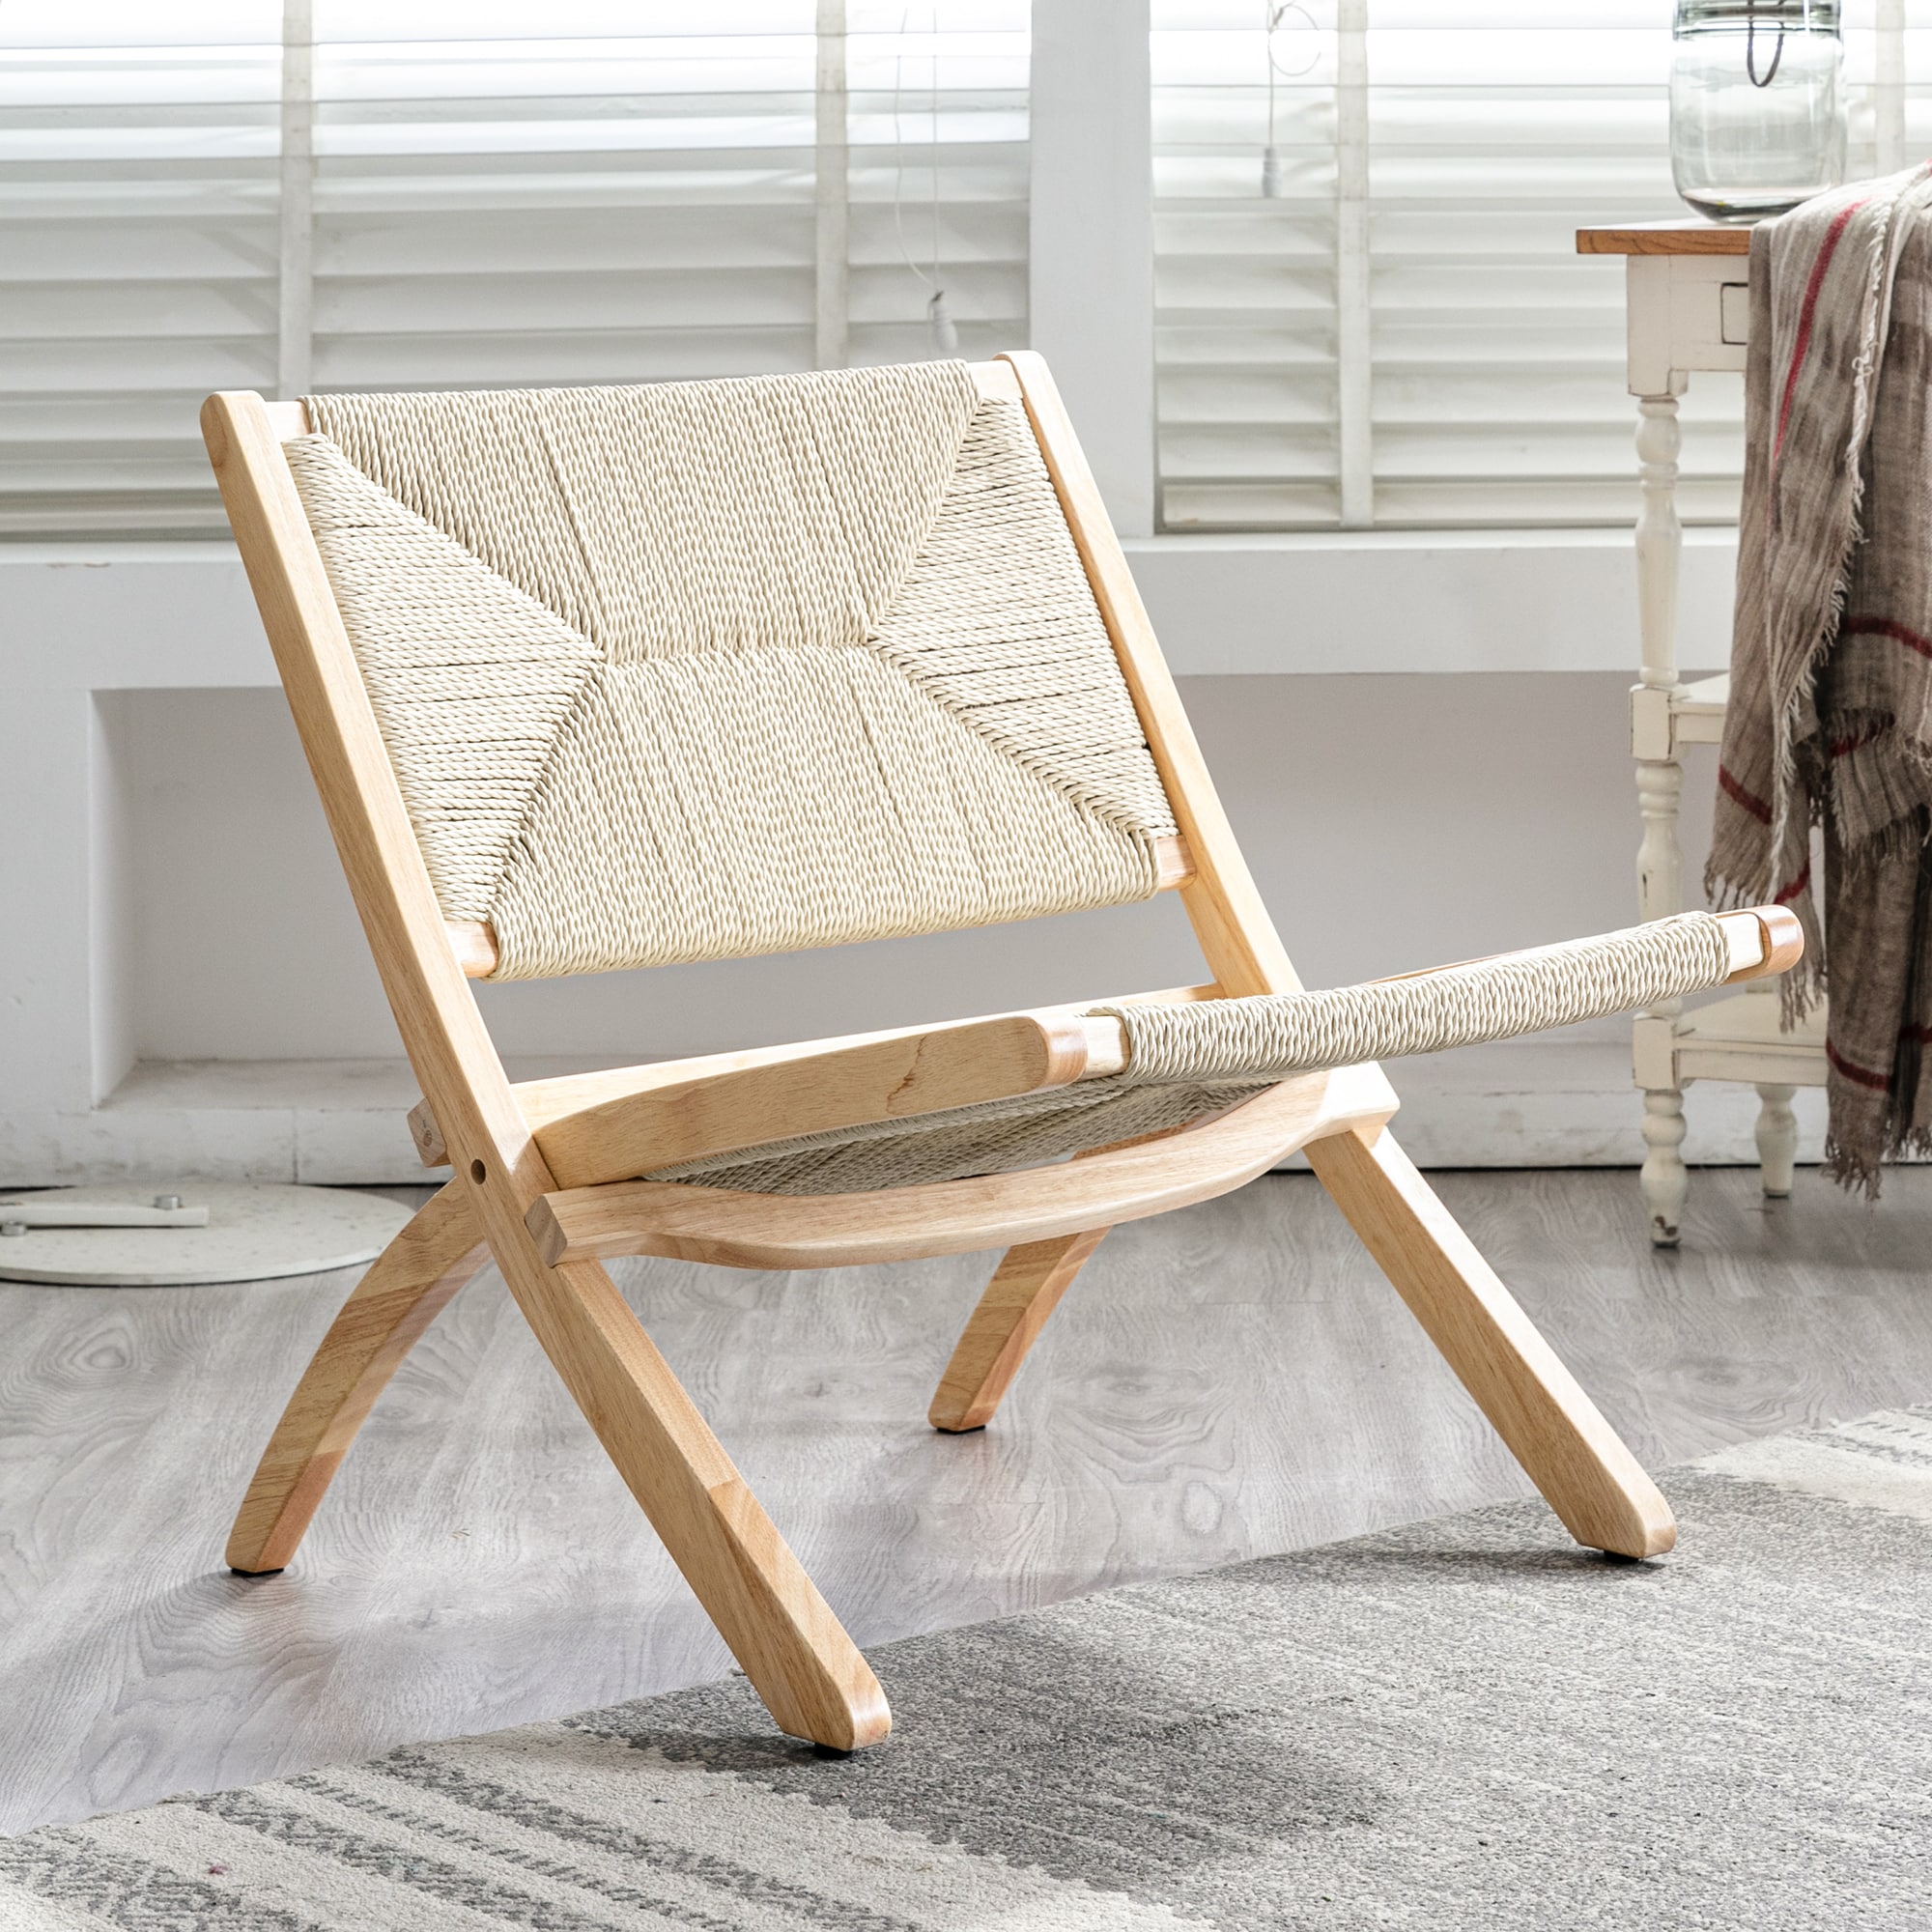 Caleb James Chairmaker Planemaker: Danish Modern Lounge Chairmaking Classes  - Learn to Weave Danish Cord